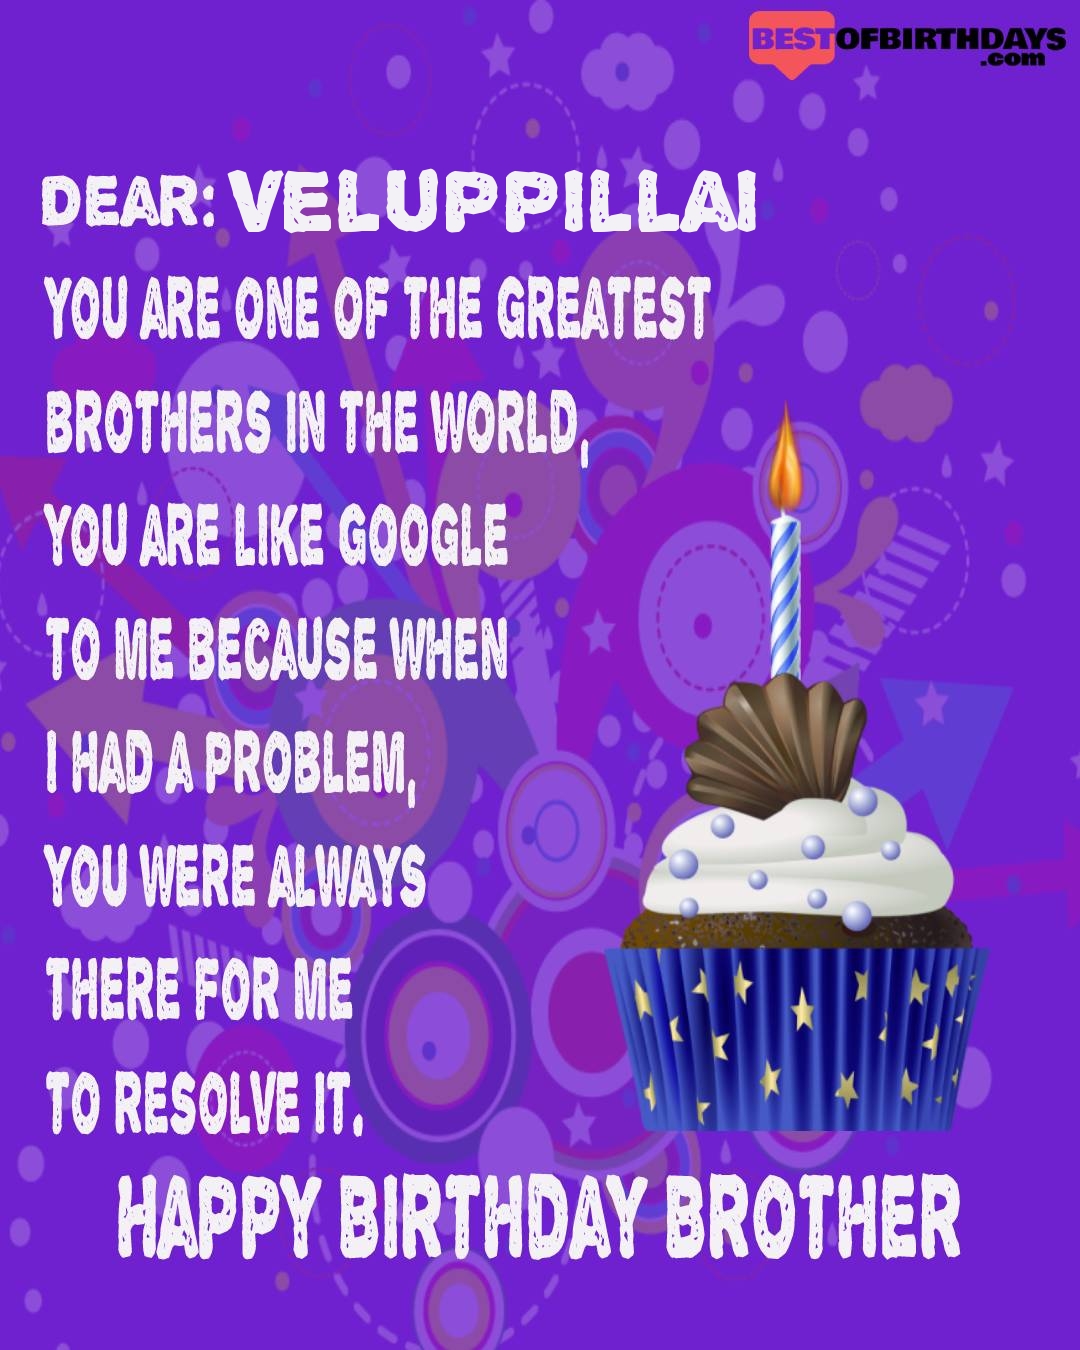 Happy birthday veluppillai bhai brother bro